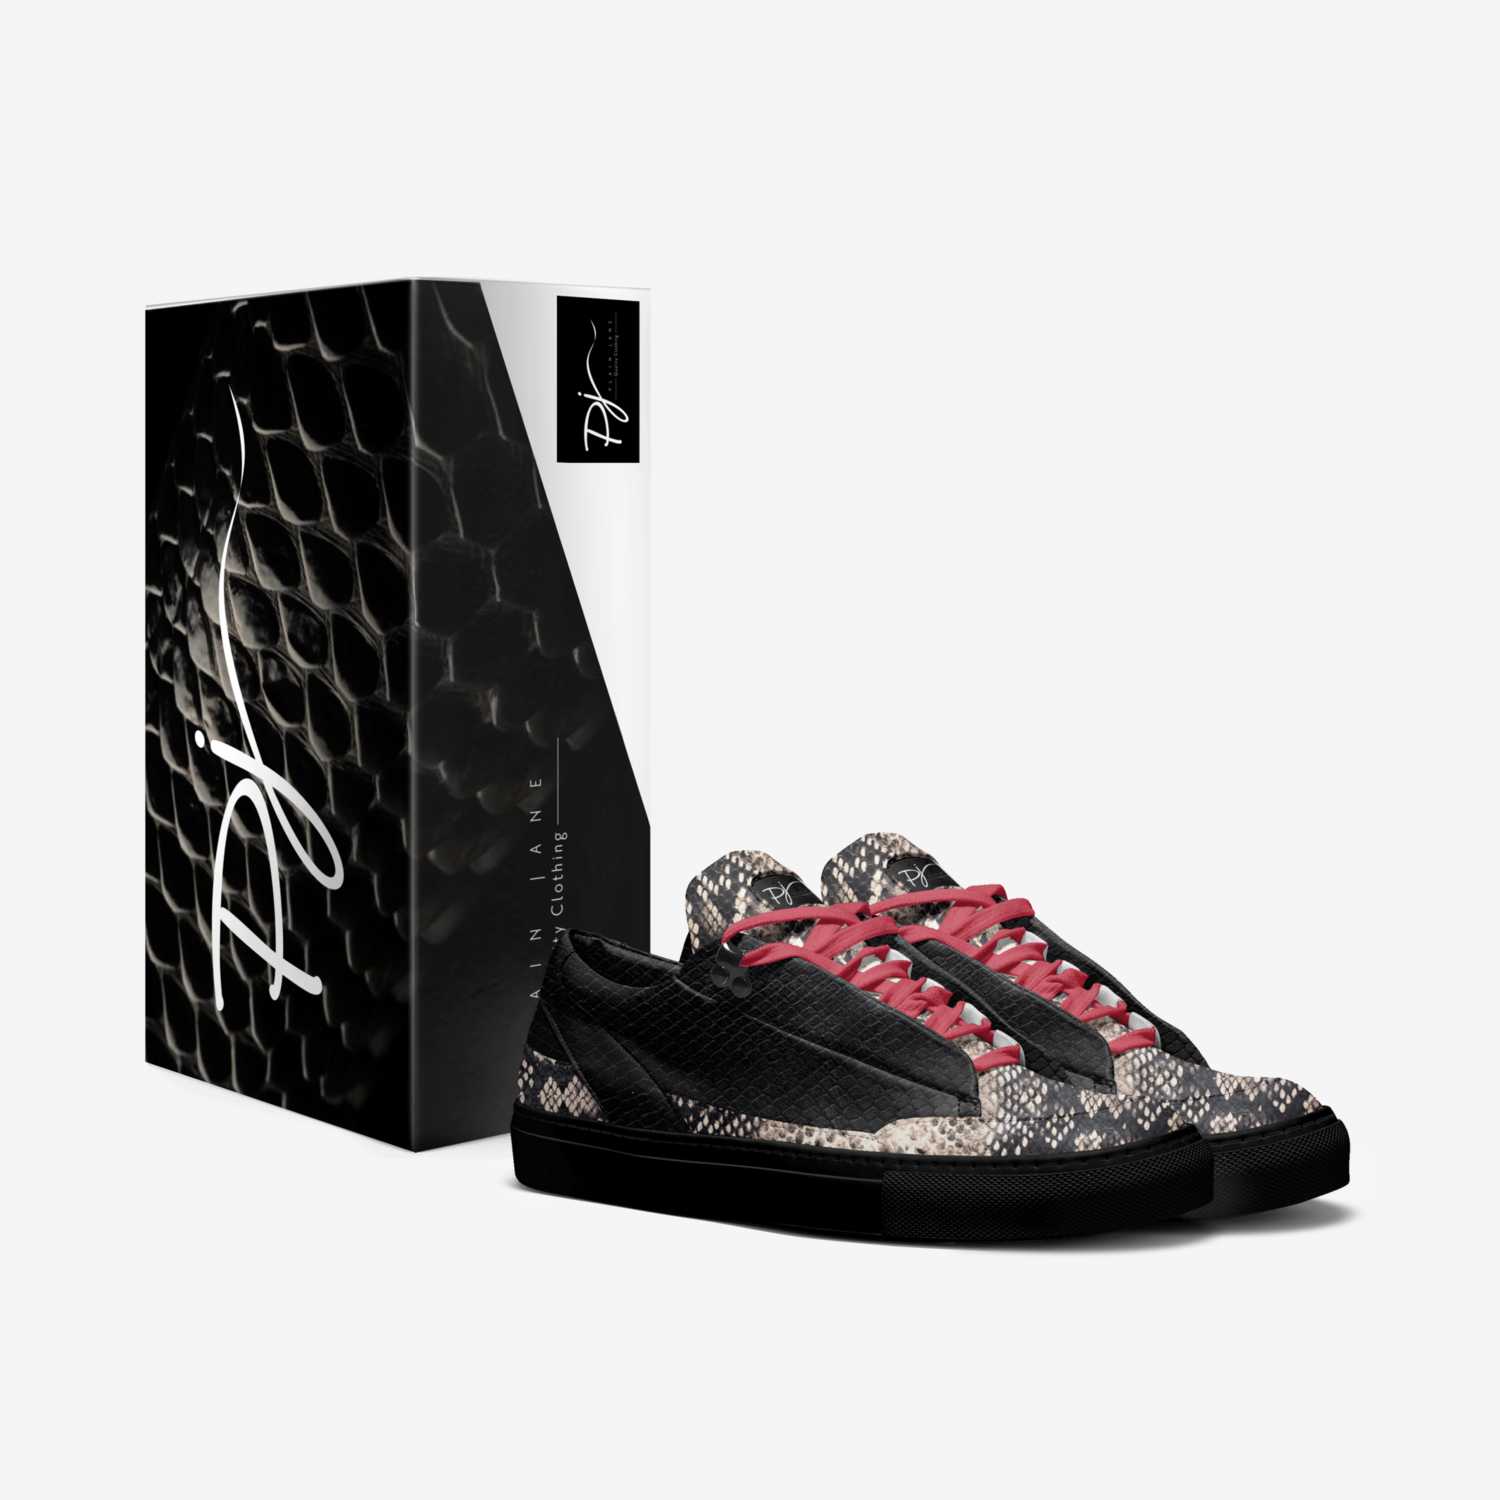 Plain Jane S2 custom made in Italy shoes by Cornelius Pratt | Box view